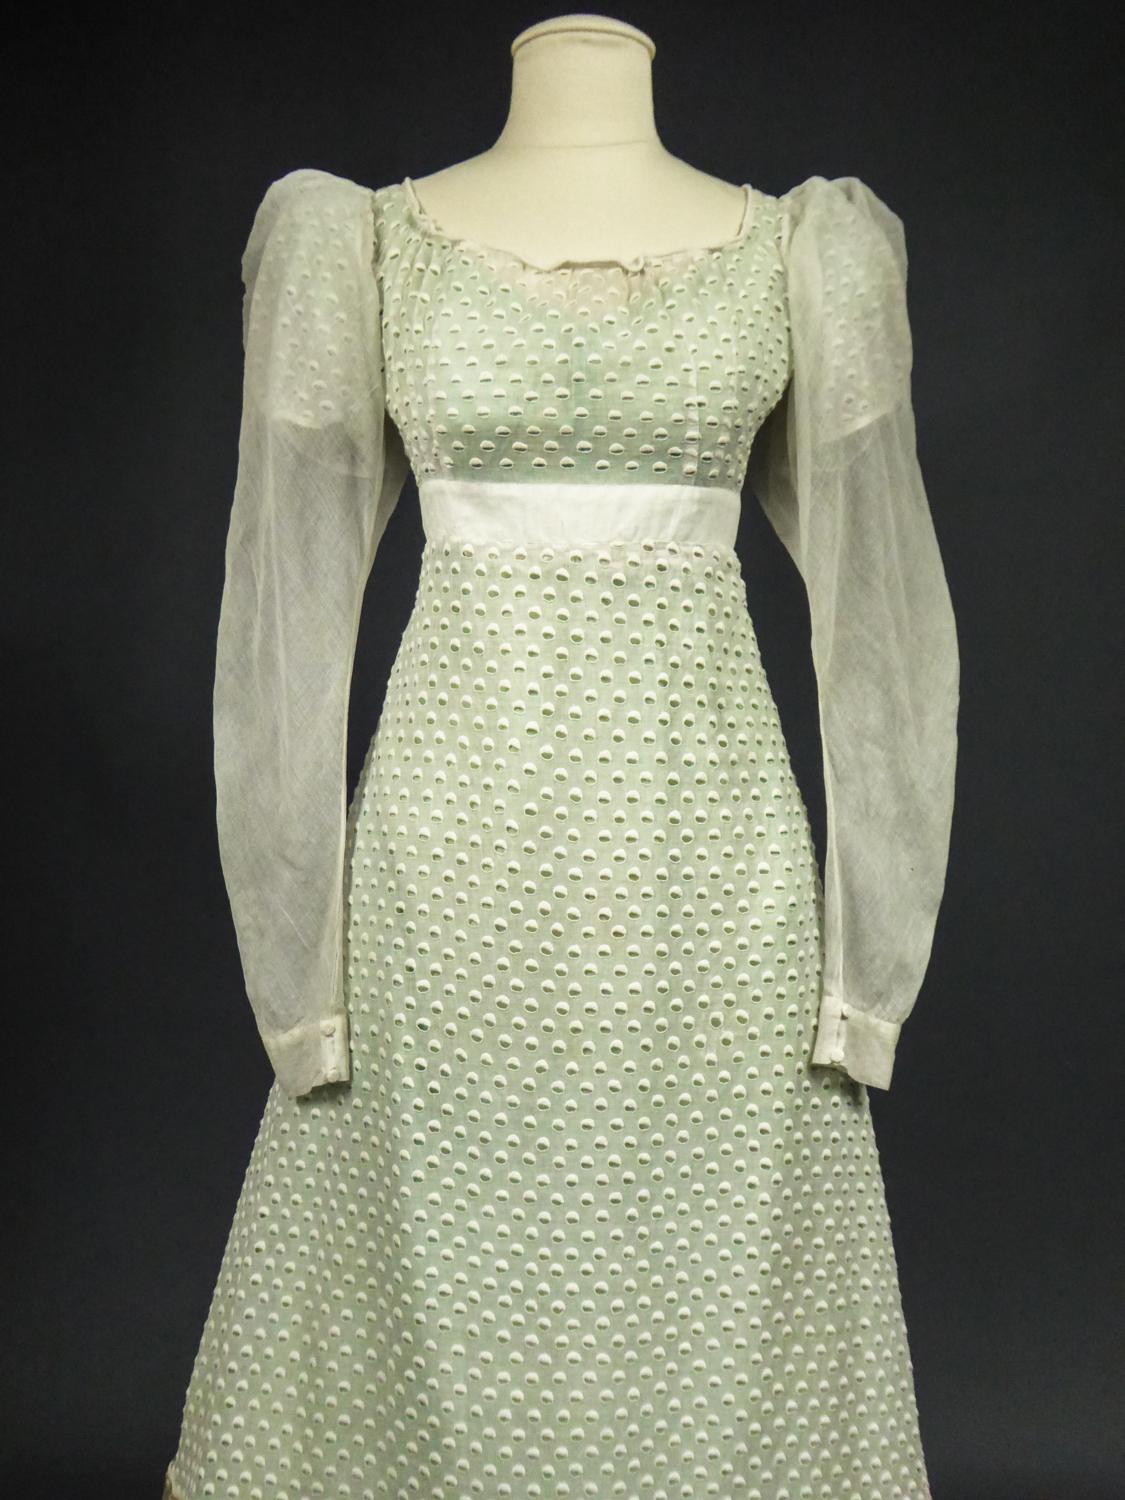 1820s day dress